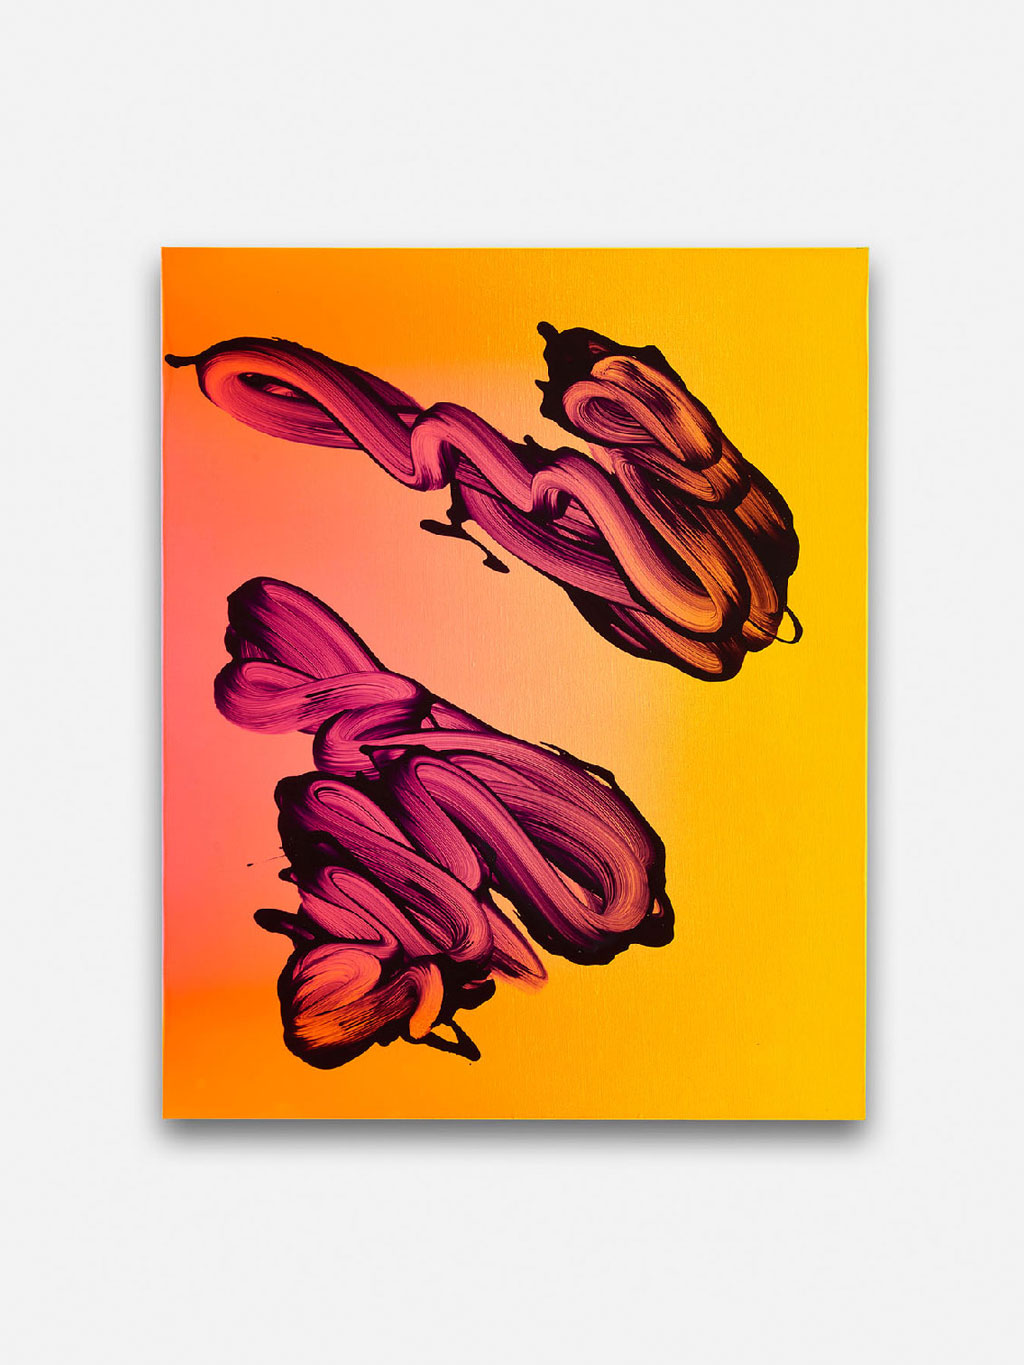 Yago Hortal - SP233. 2019. Acrylic on linen. 100 x 81 cm